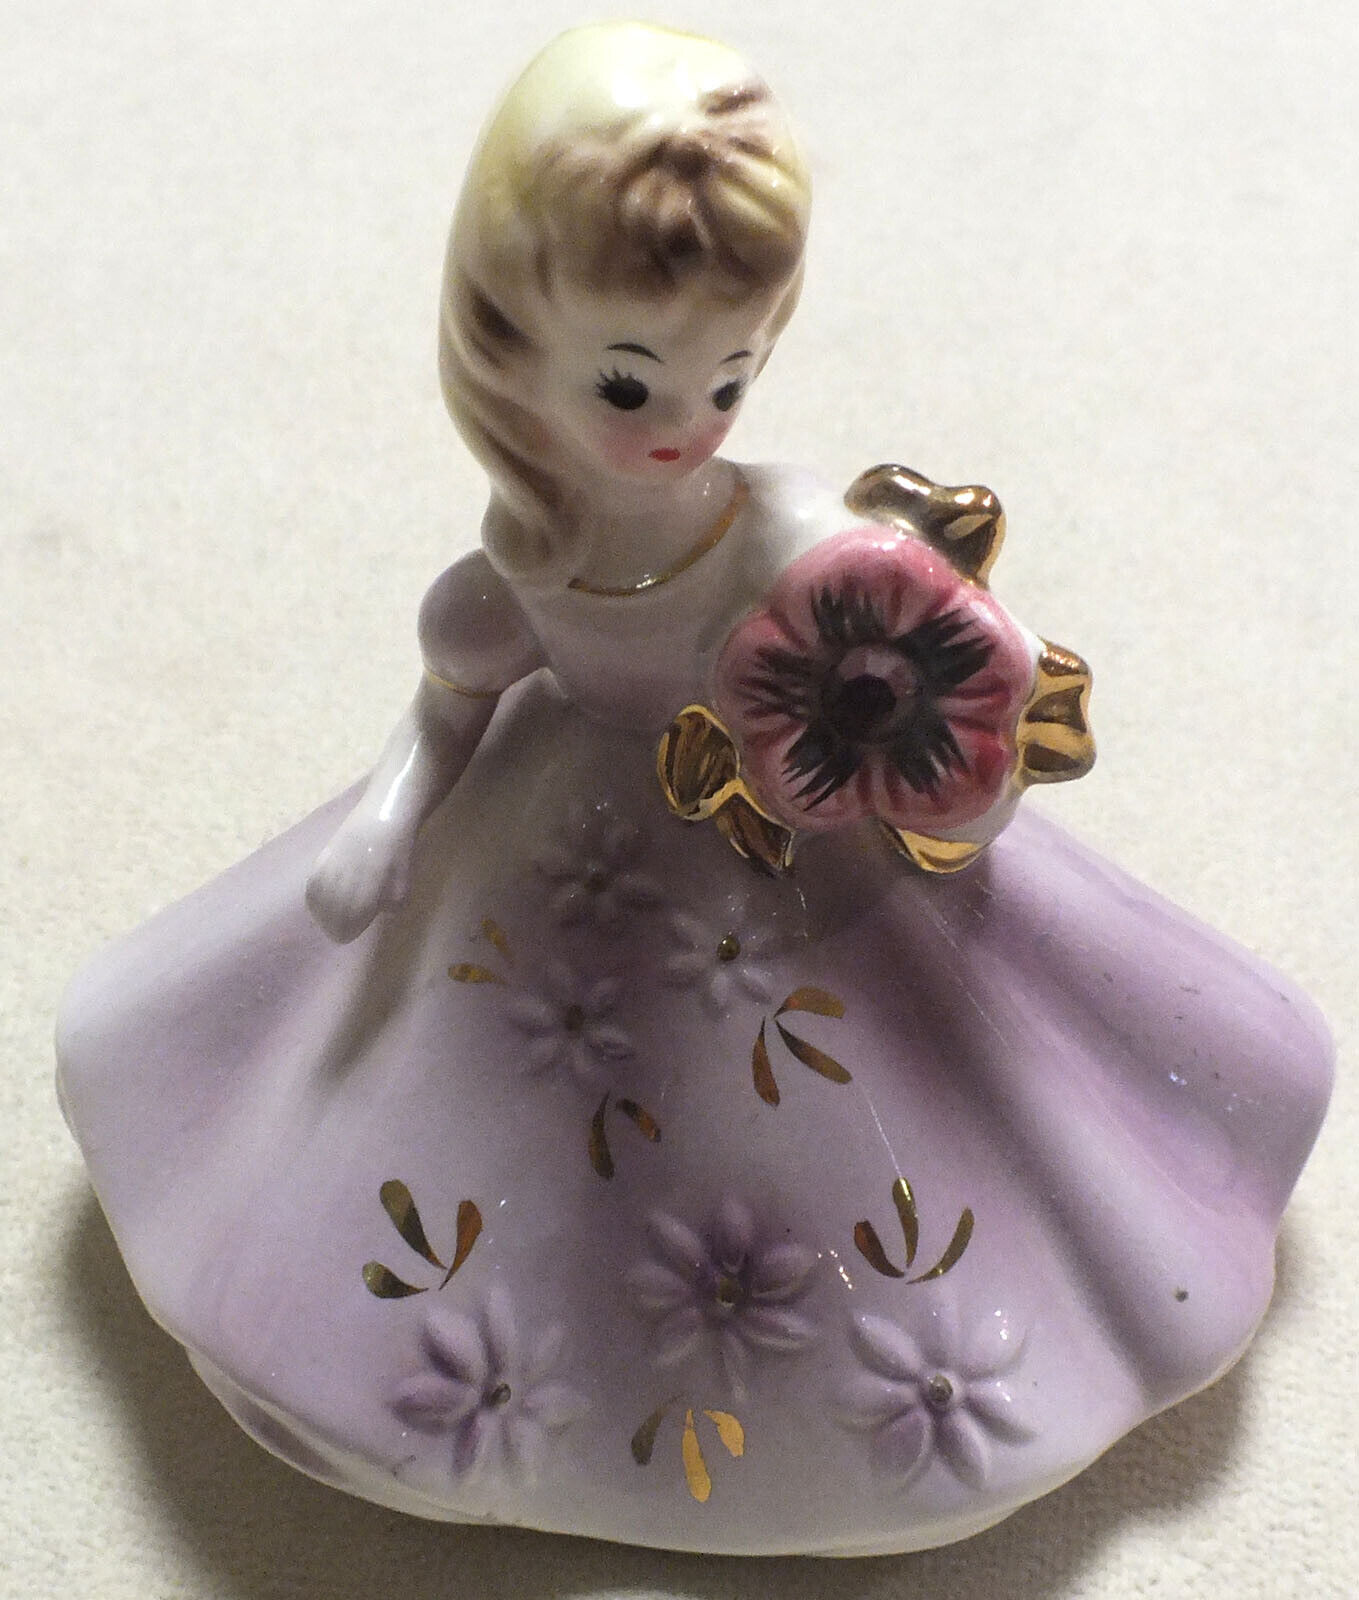 Rare Vintage Josef Originals Girl with Flower Figurine